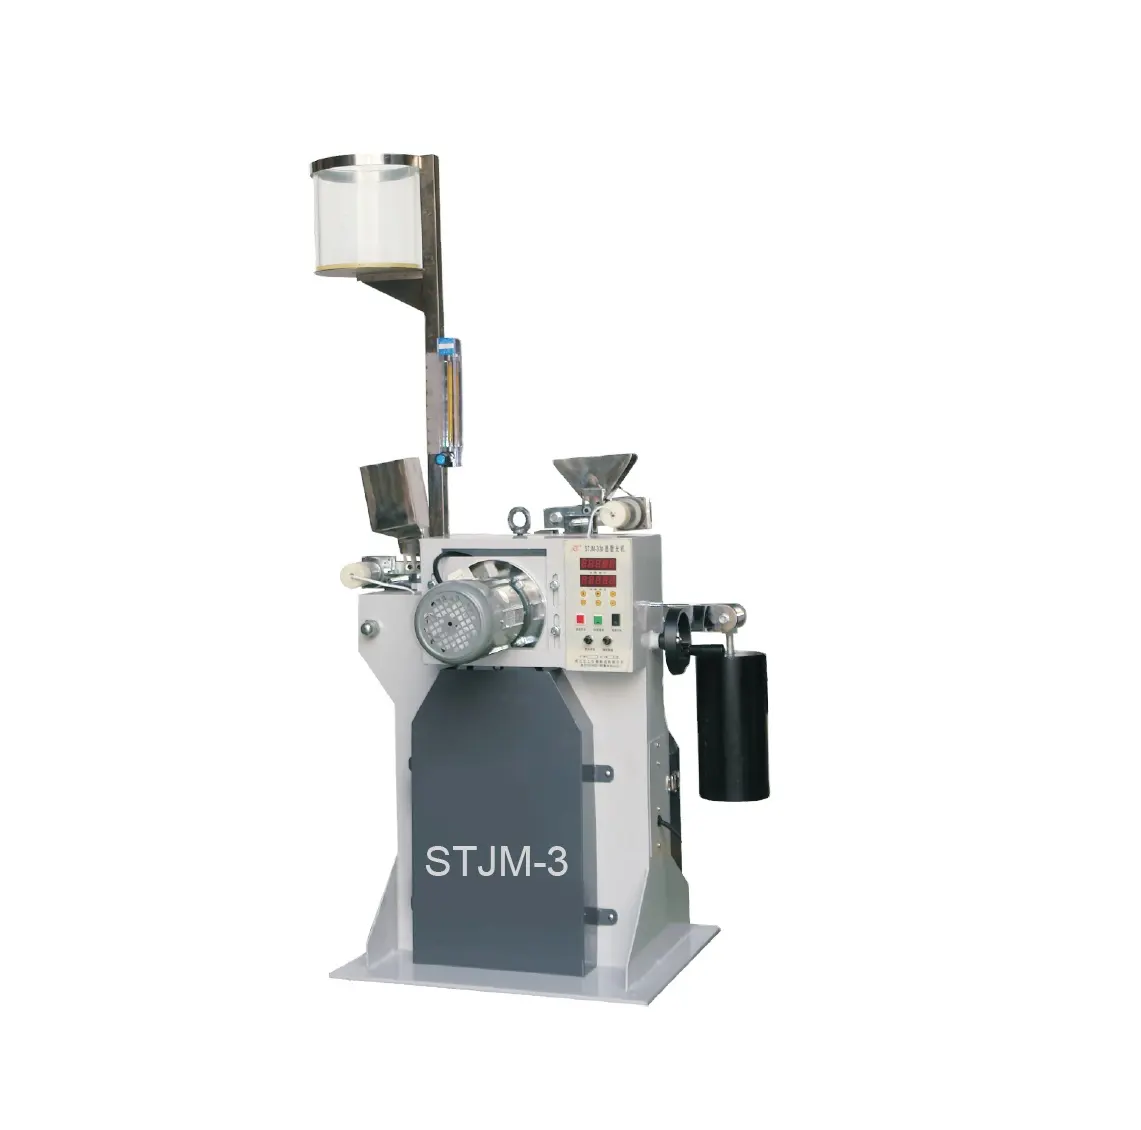 STJM-3 Acceleration Grinder Grinder Machine Pavement Accelerated Polishing Machine for Grinding Stone Materials (PSV) Civil Lab